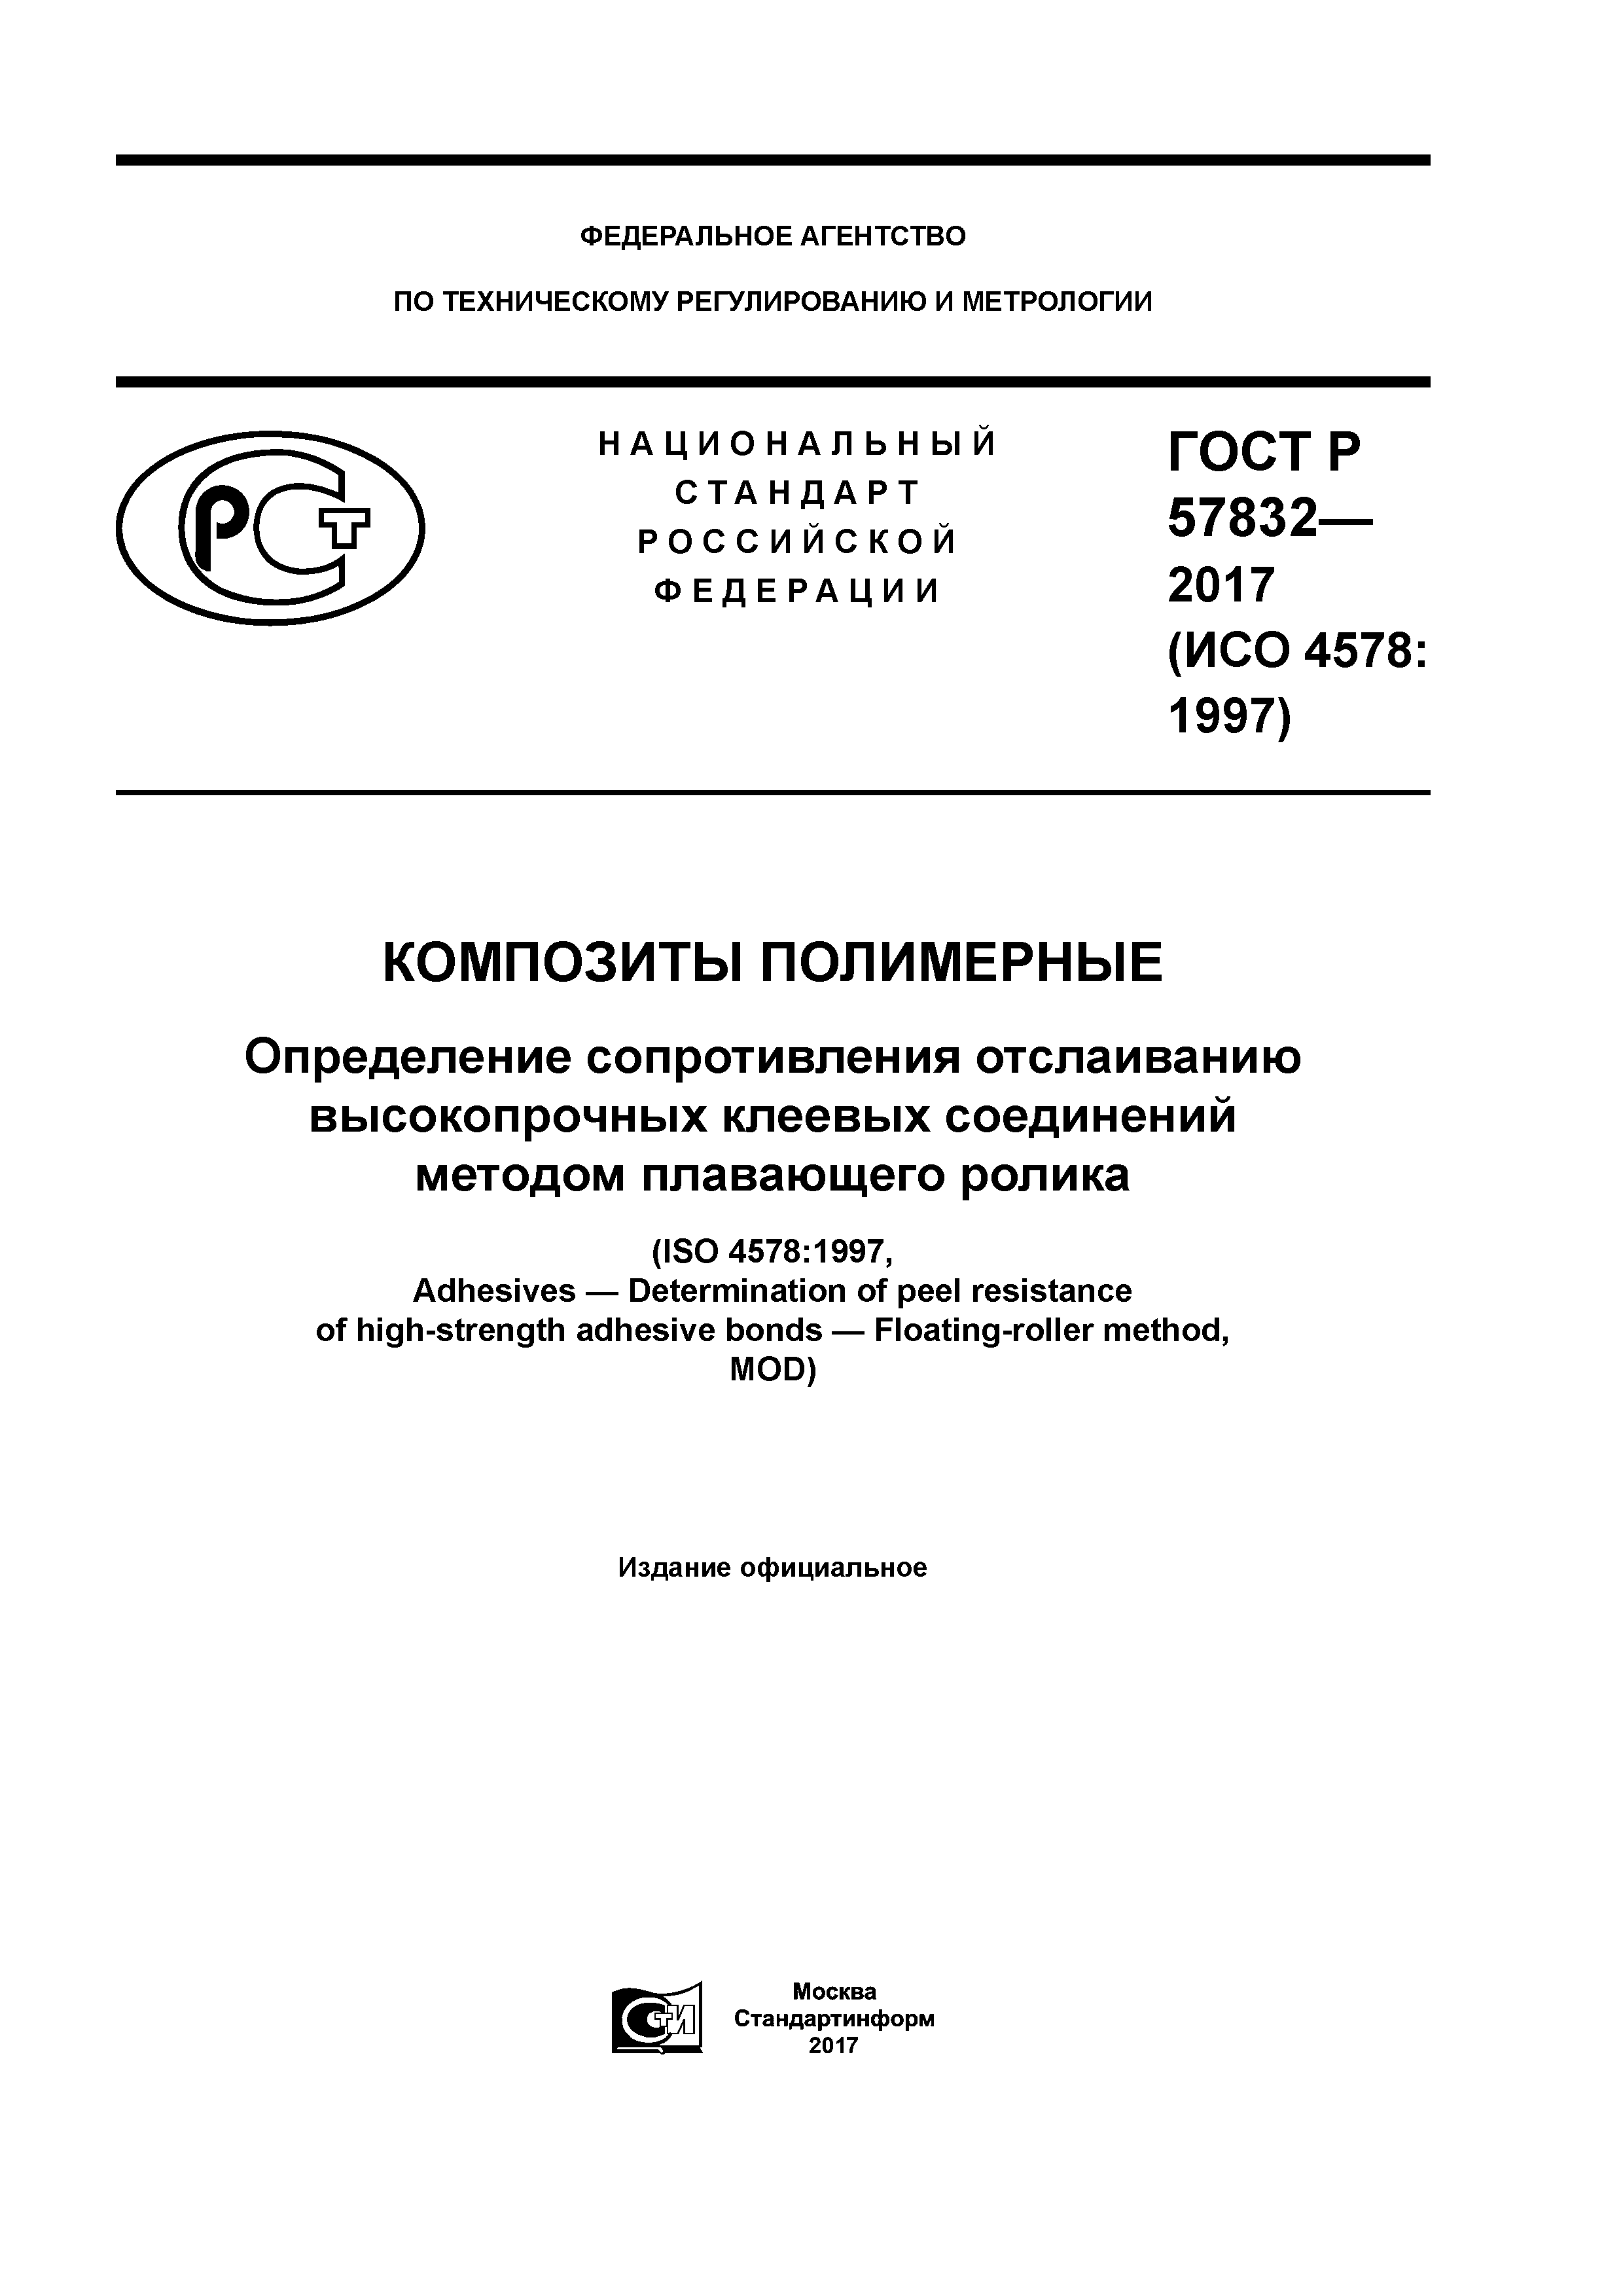 ГОСТ Р 57832-2017